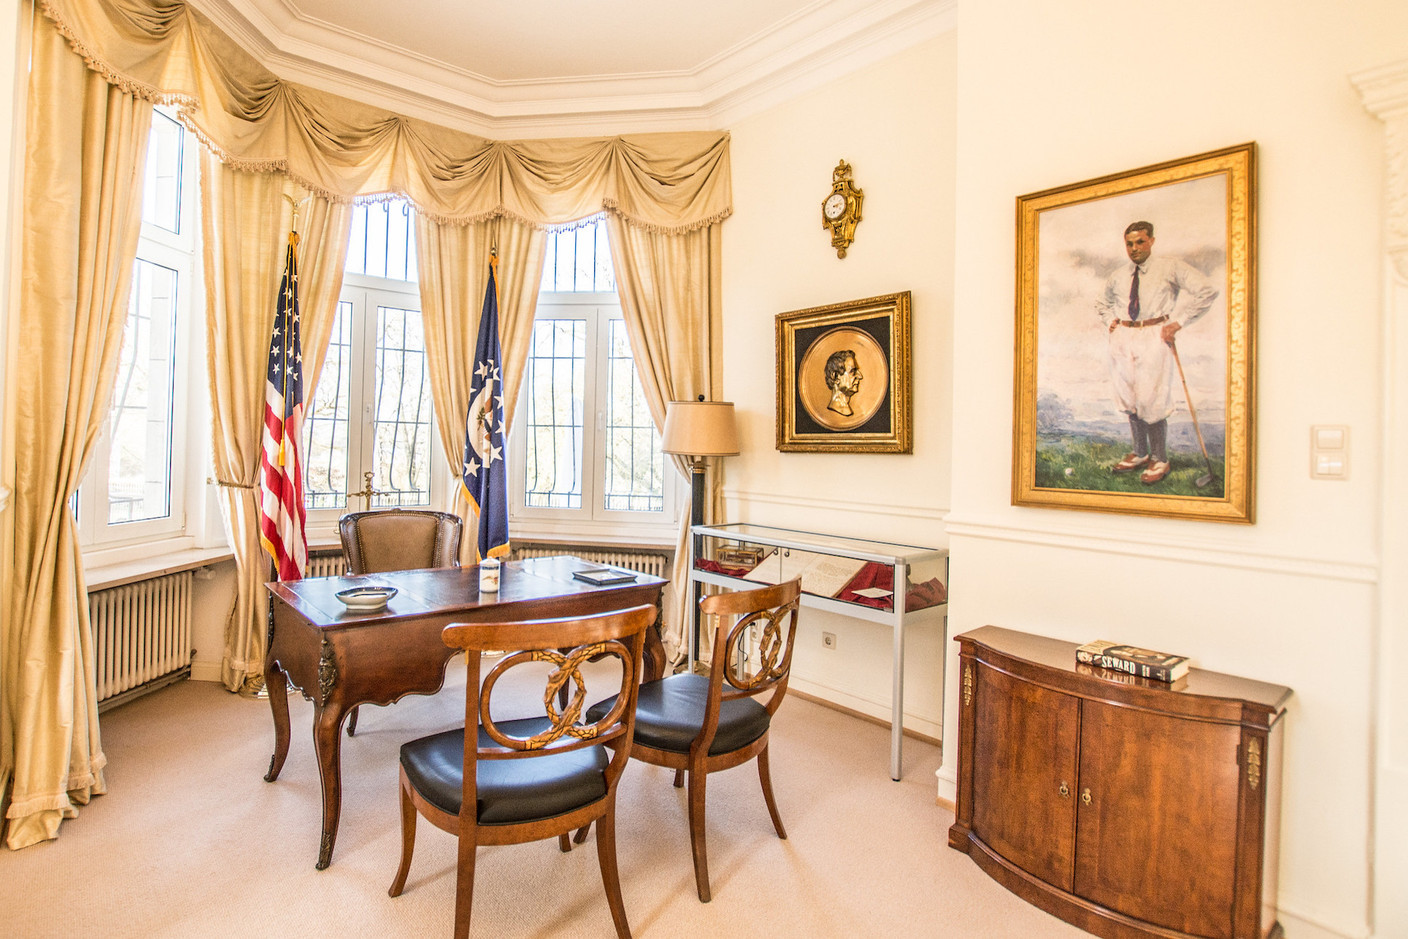 Bureau principal de la résidence. Ambassade des États-Unis au Luxembourg